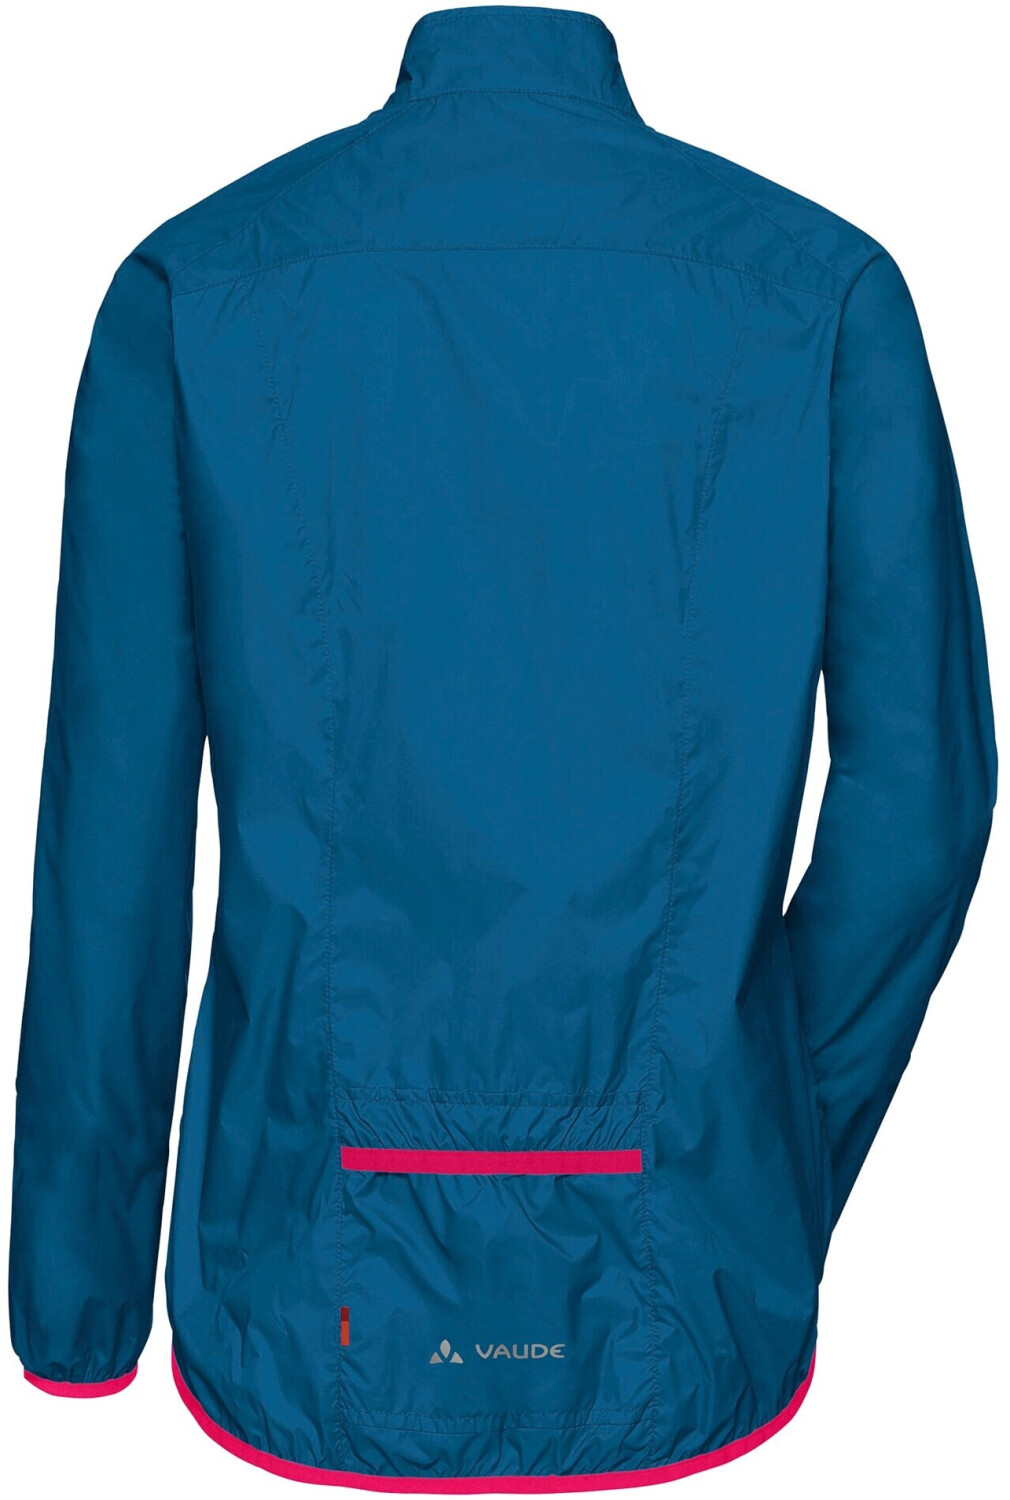 VAUDE Women\'s Air Jacket III kingfisher/pink ab 59,95 € | Preisvergleich  bei